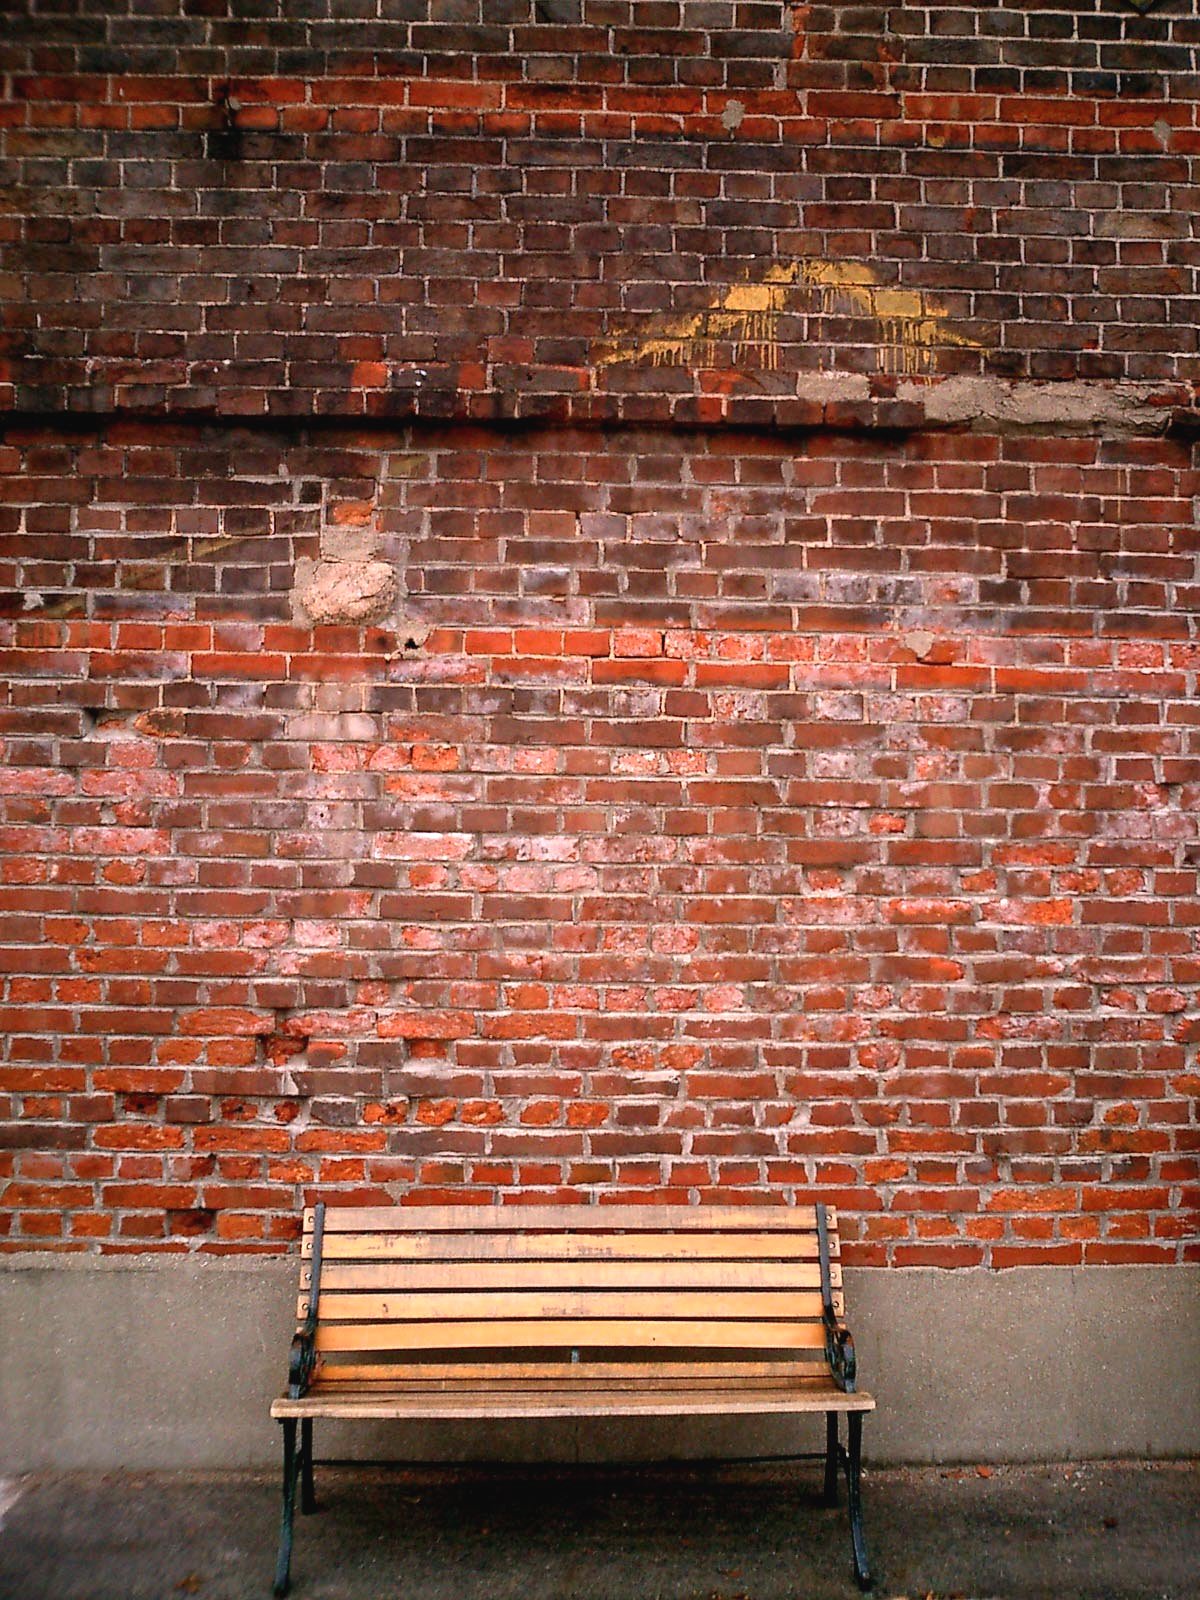 brick wall wallpaper,brick,brickwork,wall,bench,furniture